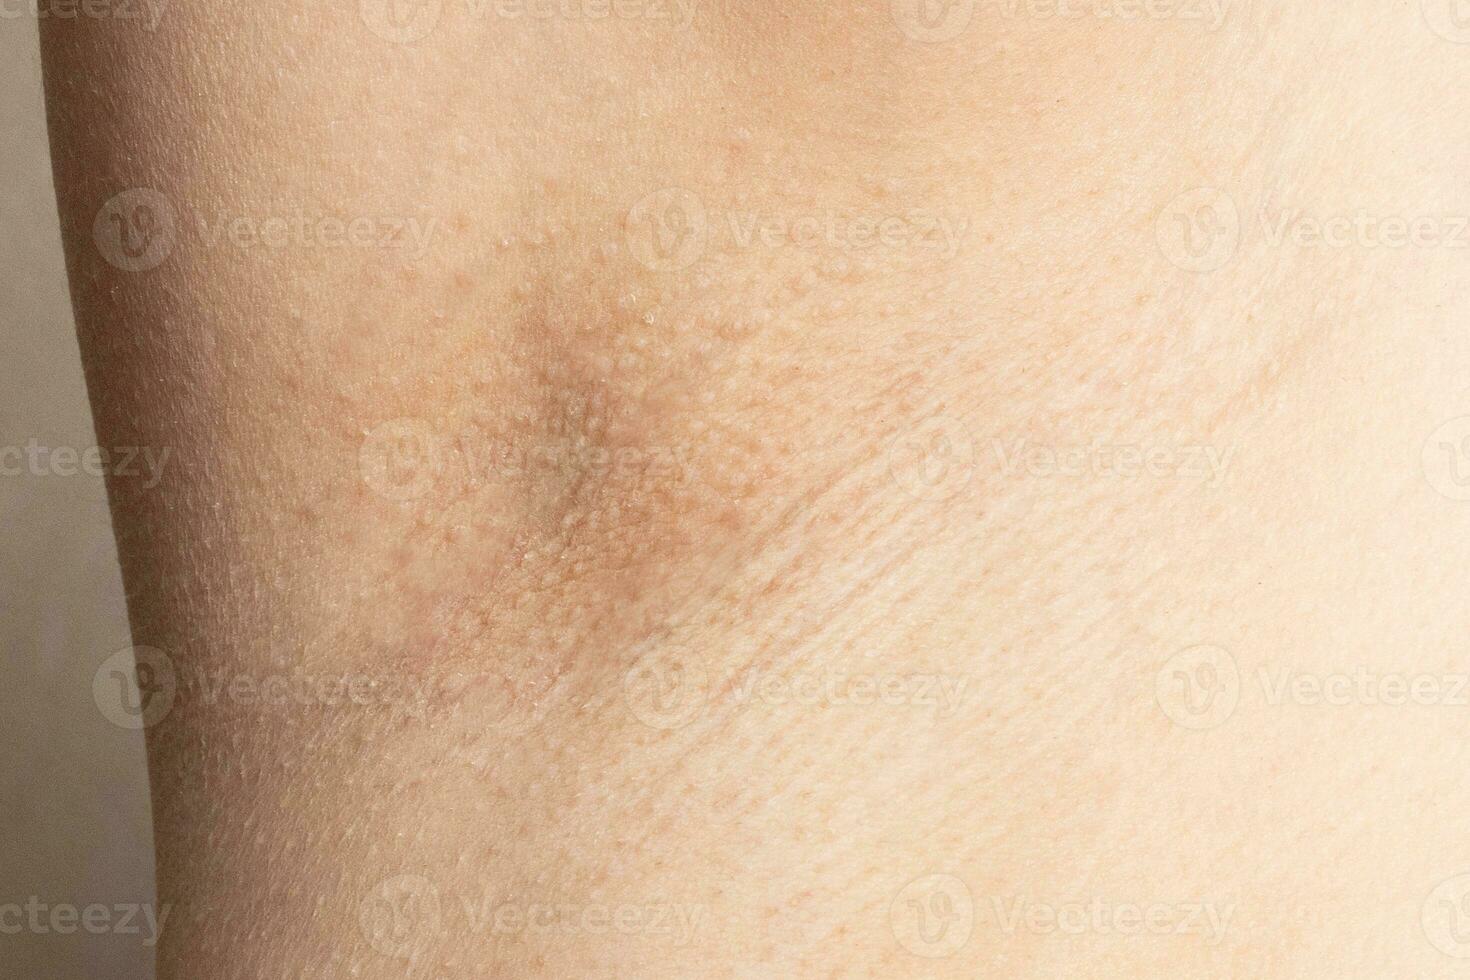 armpit female closeup woman under arm before hair removal photo